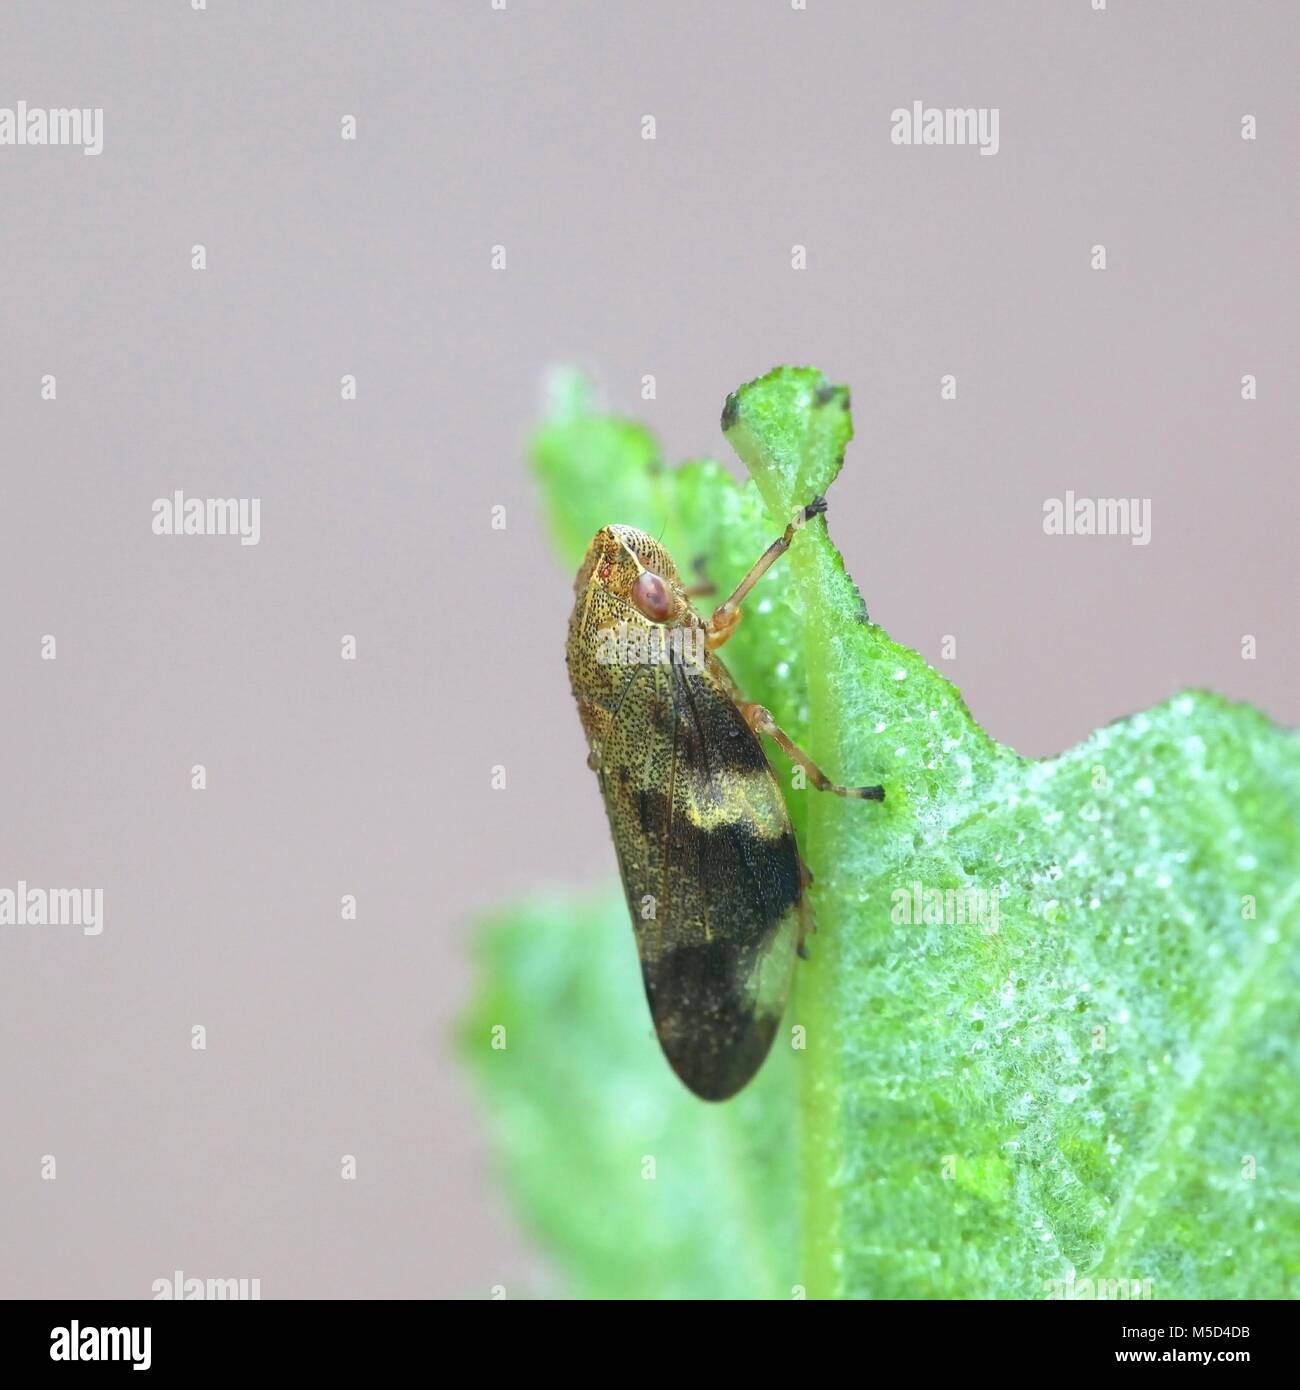 European Alder Spittle Bug or Froghopper, Aphrophora alni Stock Photo